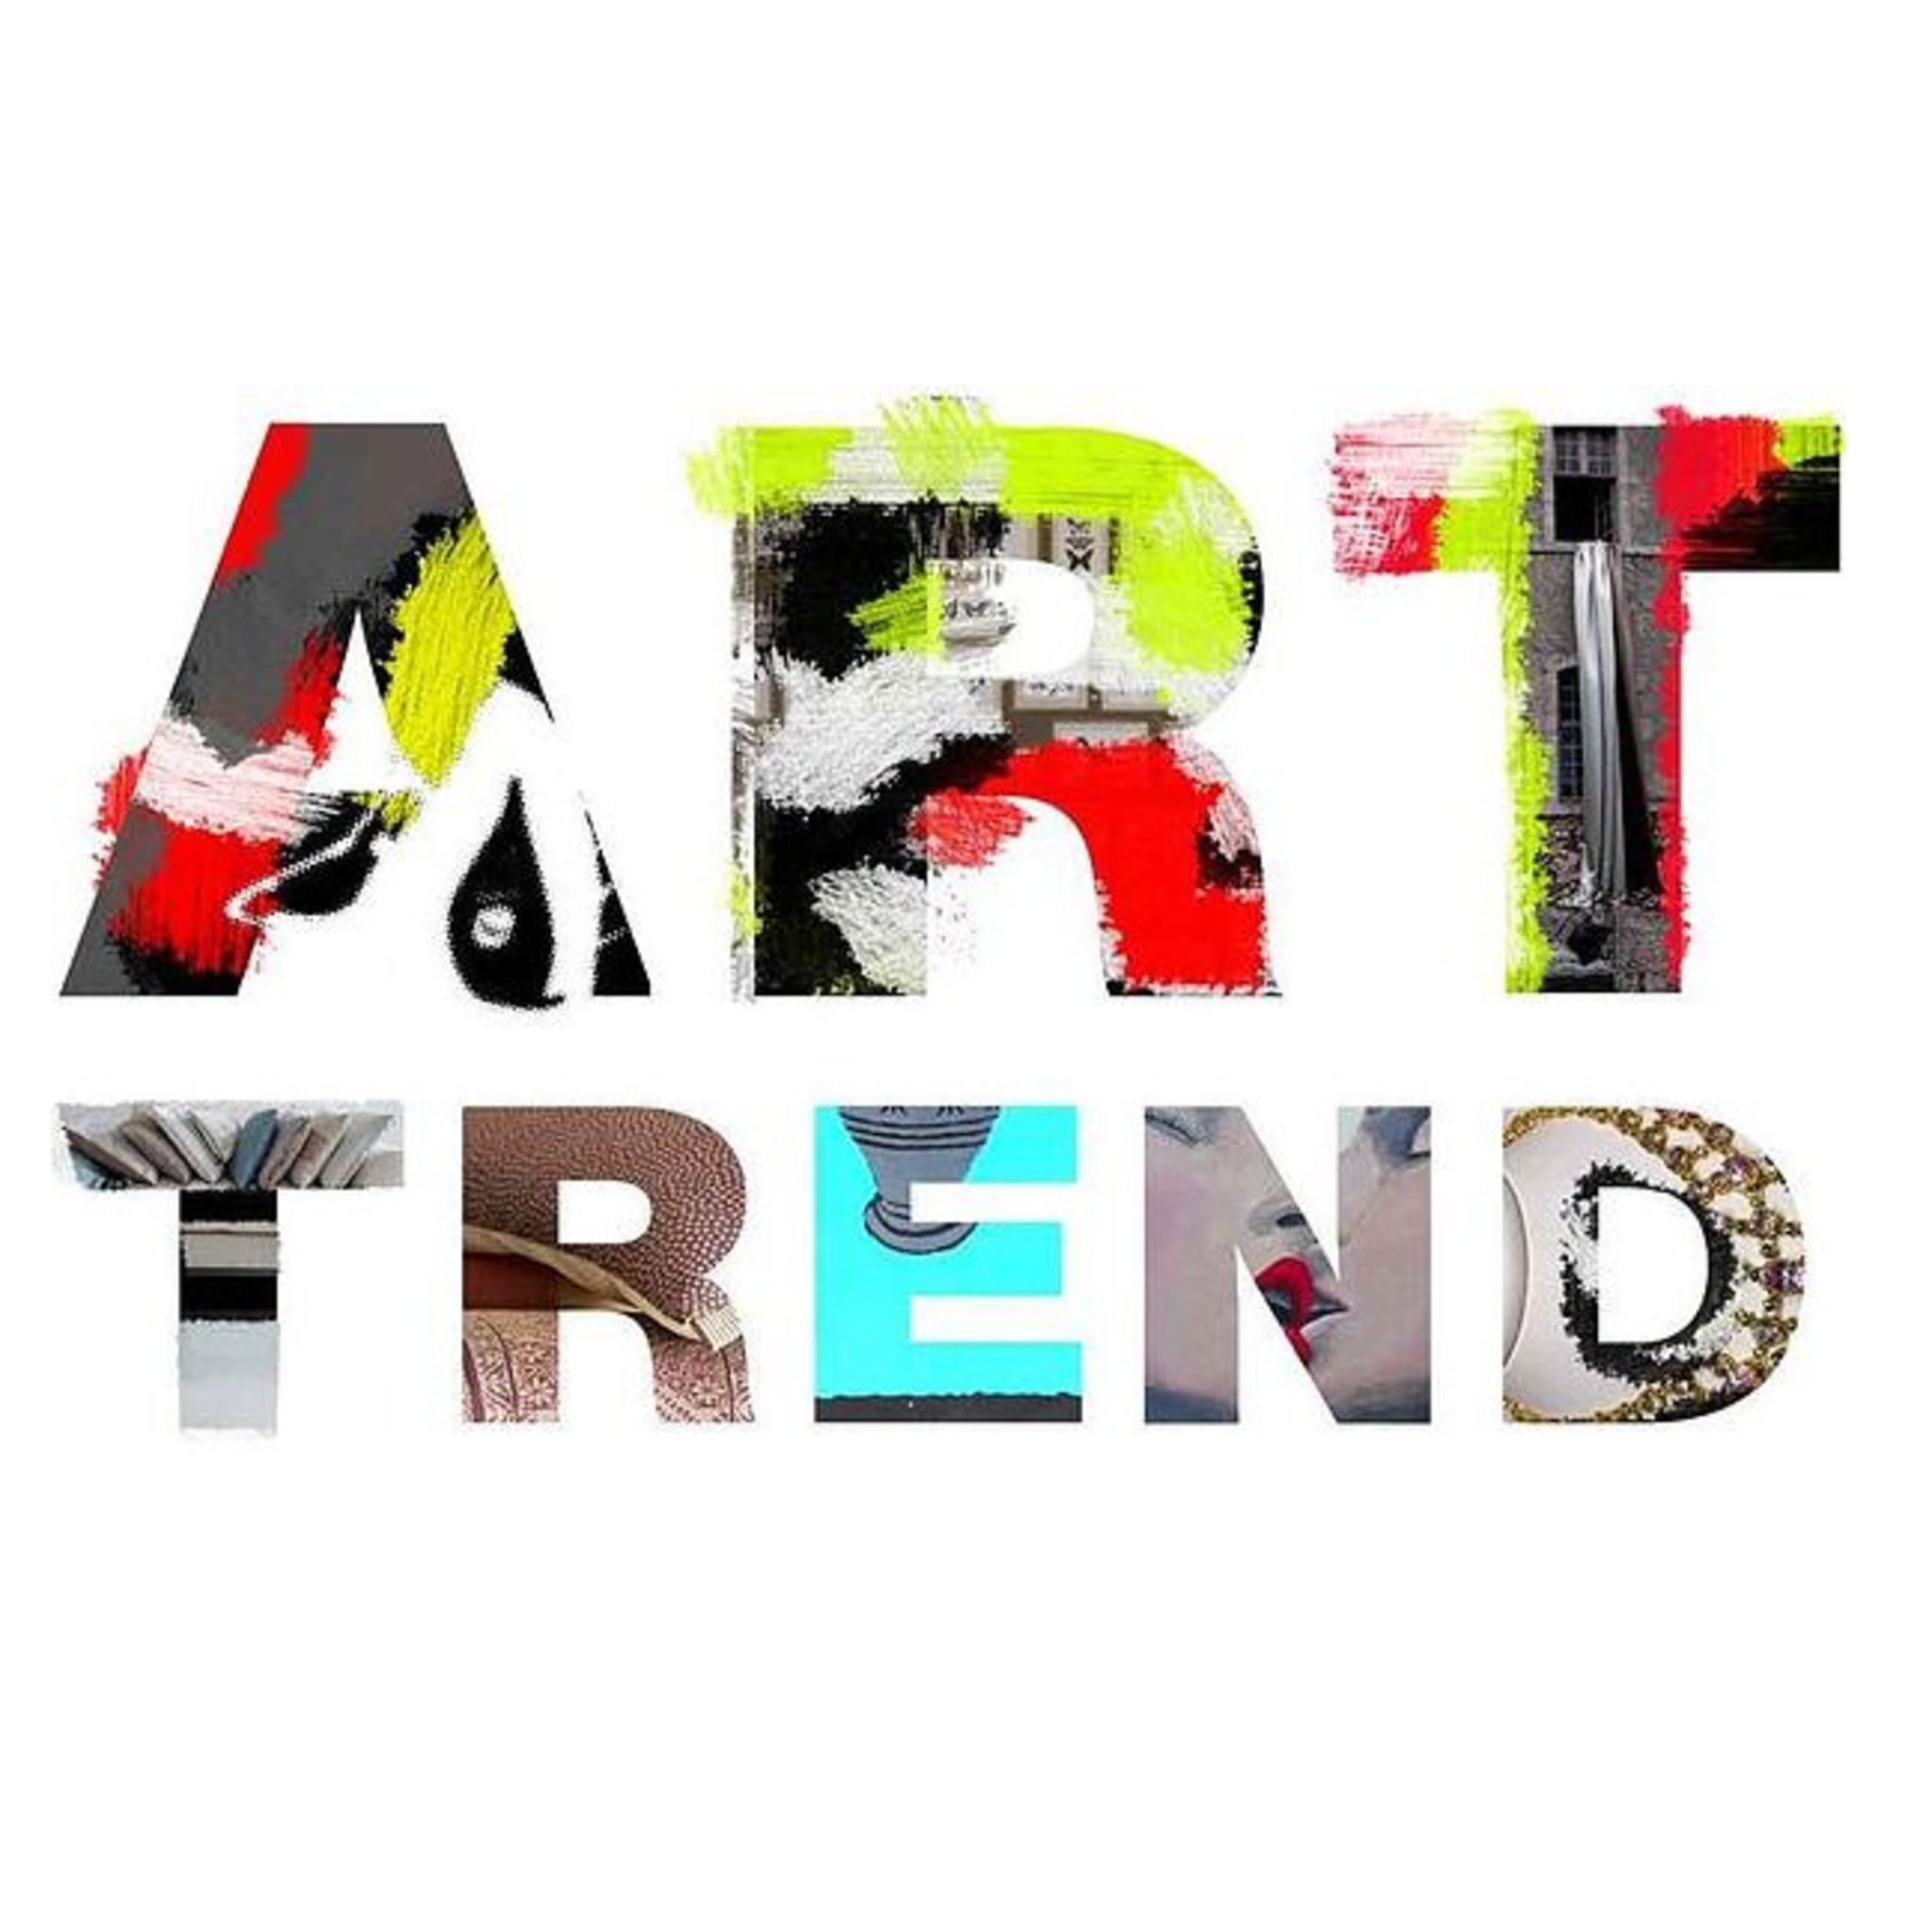 The exhibition Art Trend